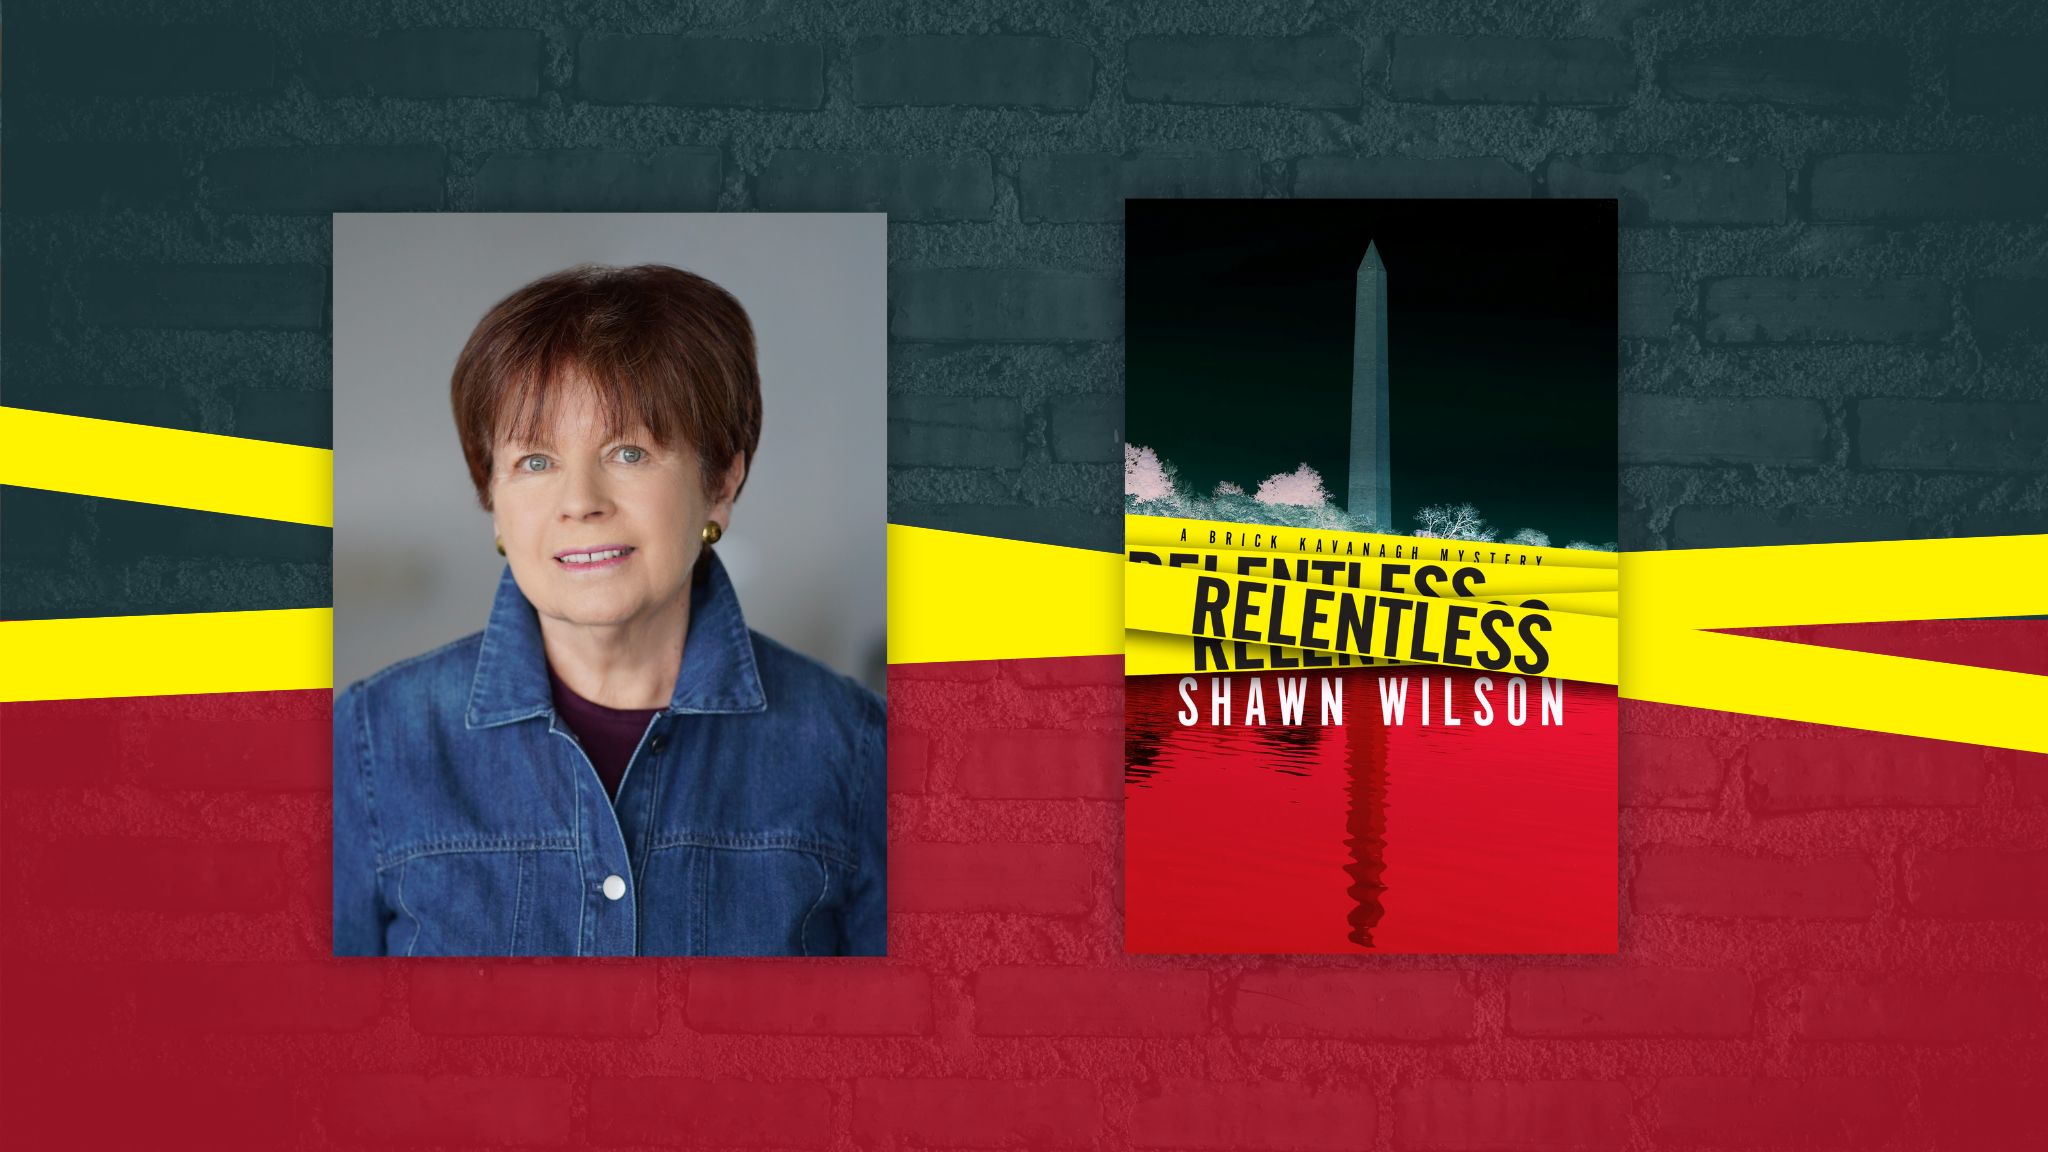 Relentless by Shawn Wilson - Author Spotlight